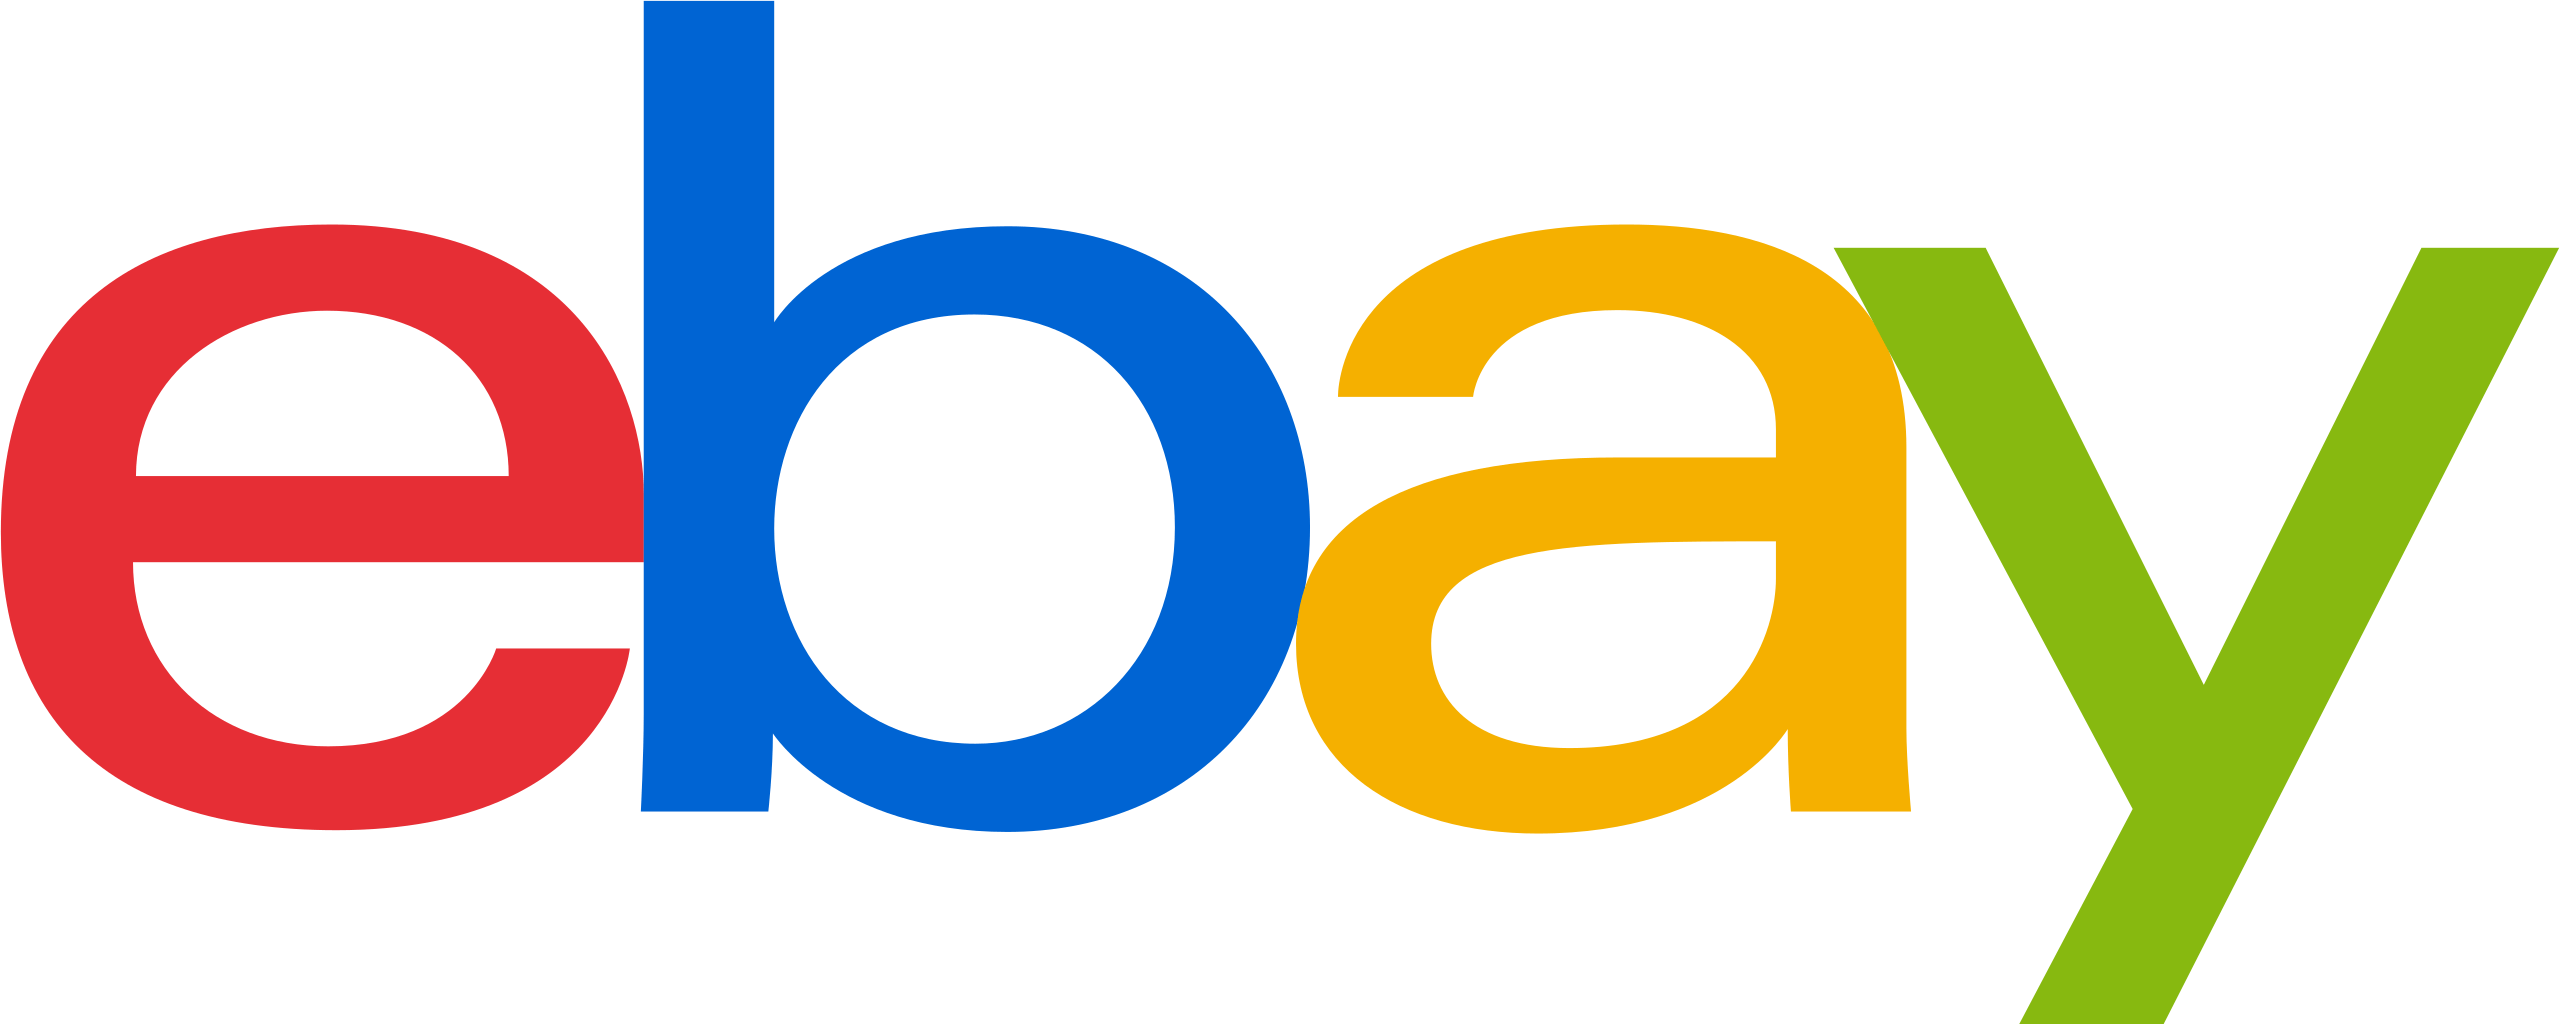 eBay Logo Online Shop